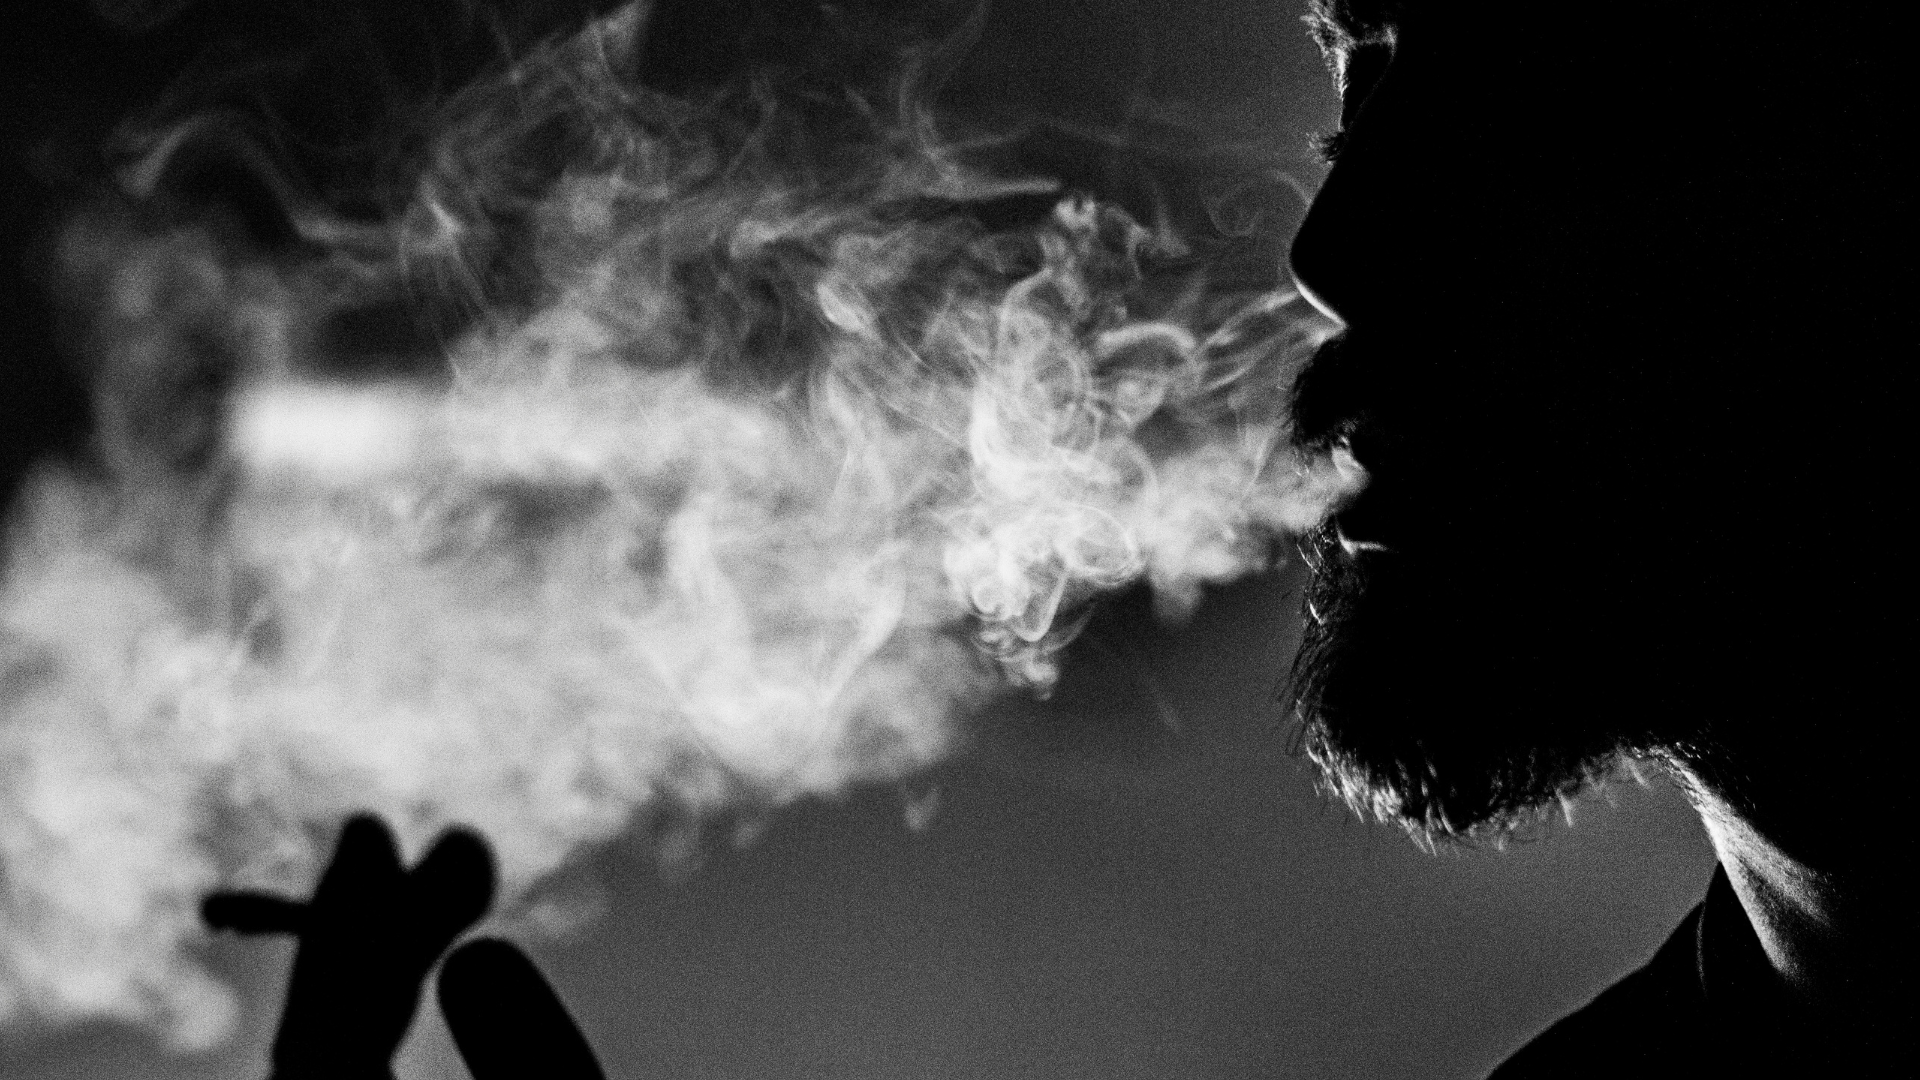 Silhouette of someone smoking and exhaling smoke.